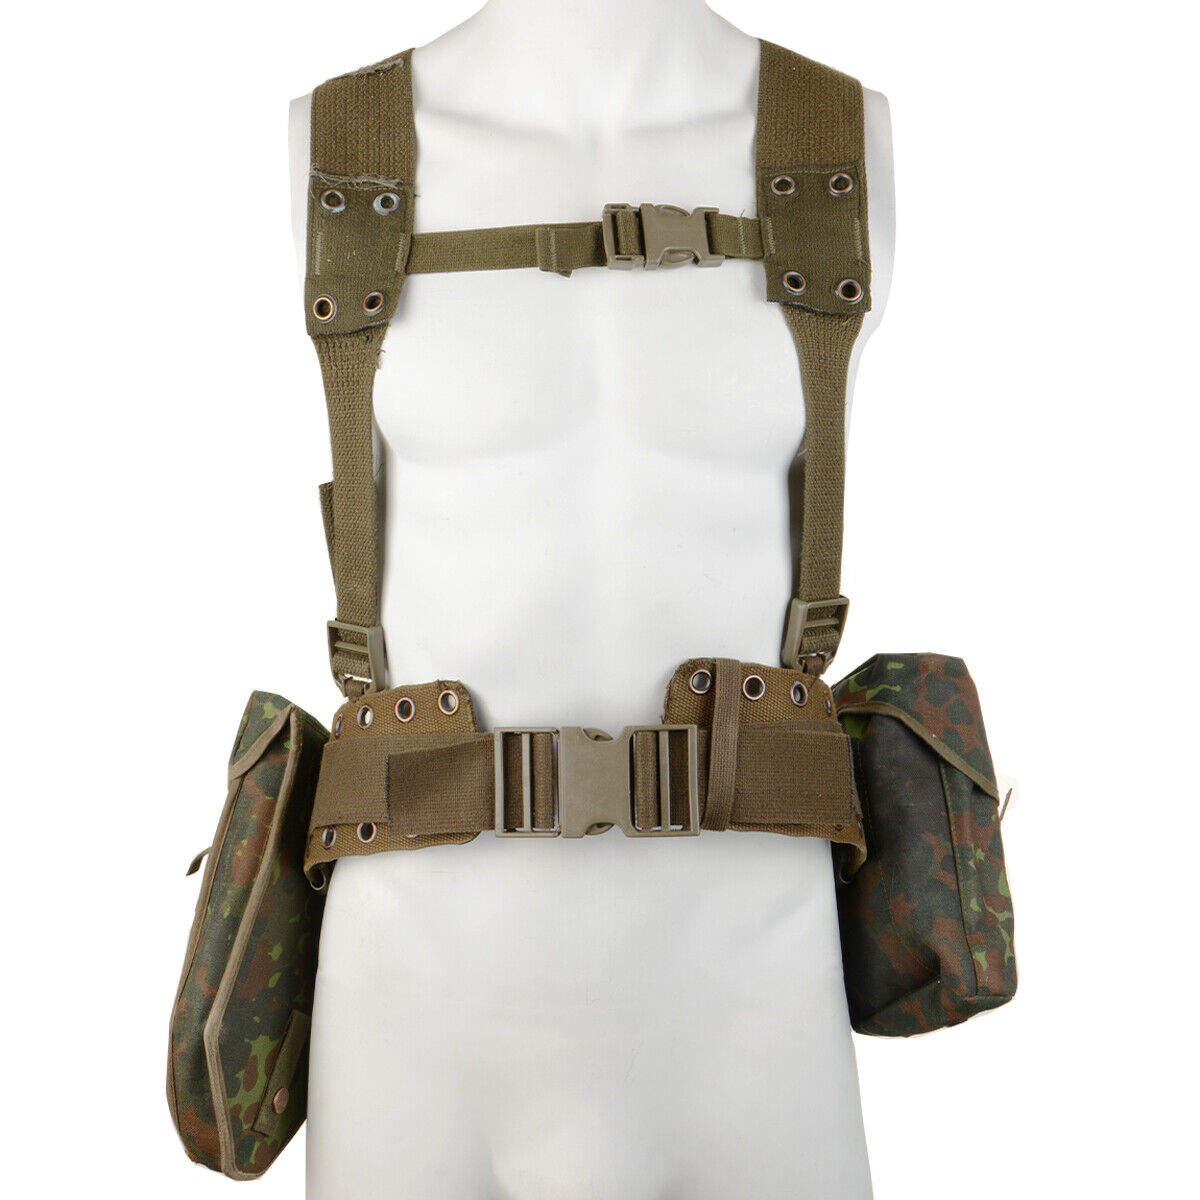 Genuine Original German Military 5 Piece Harness Set - Flecktarn Camouflage